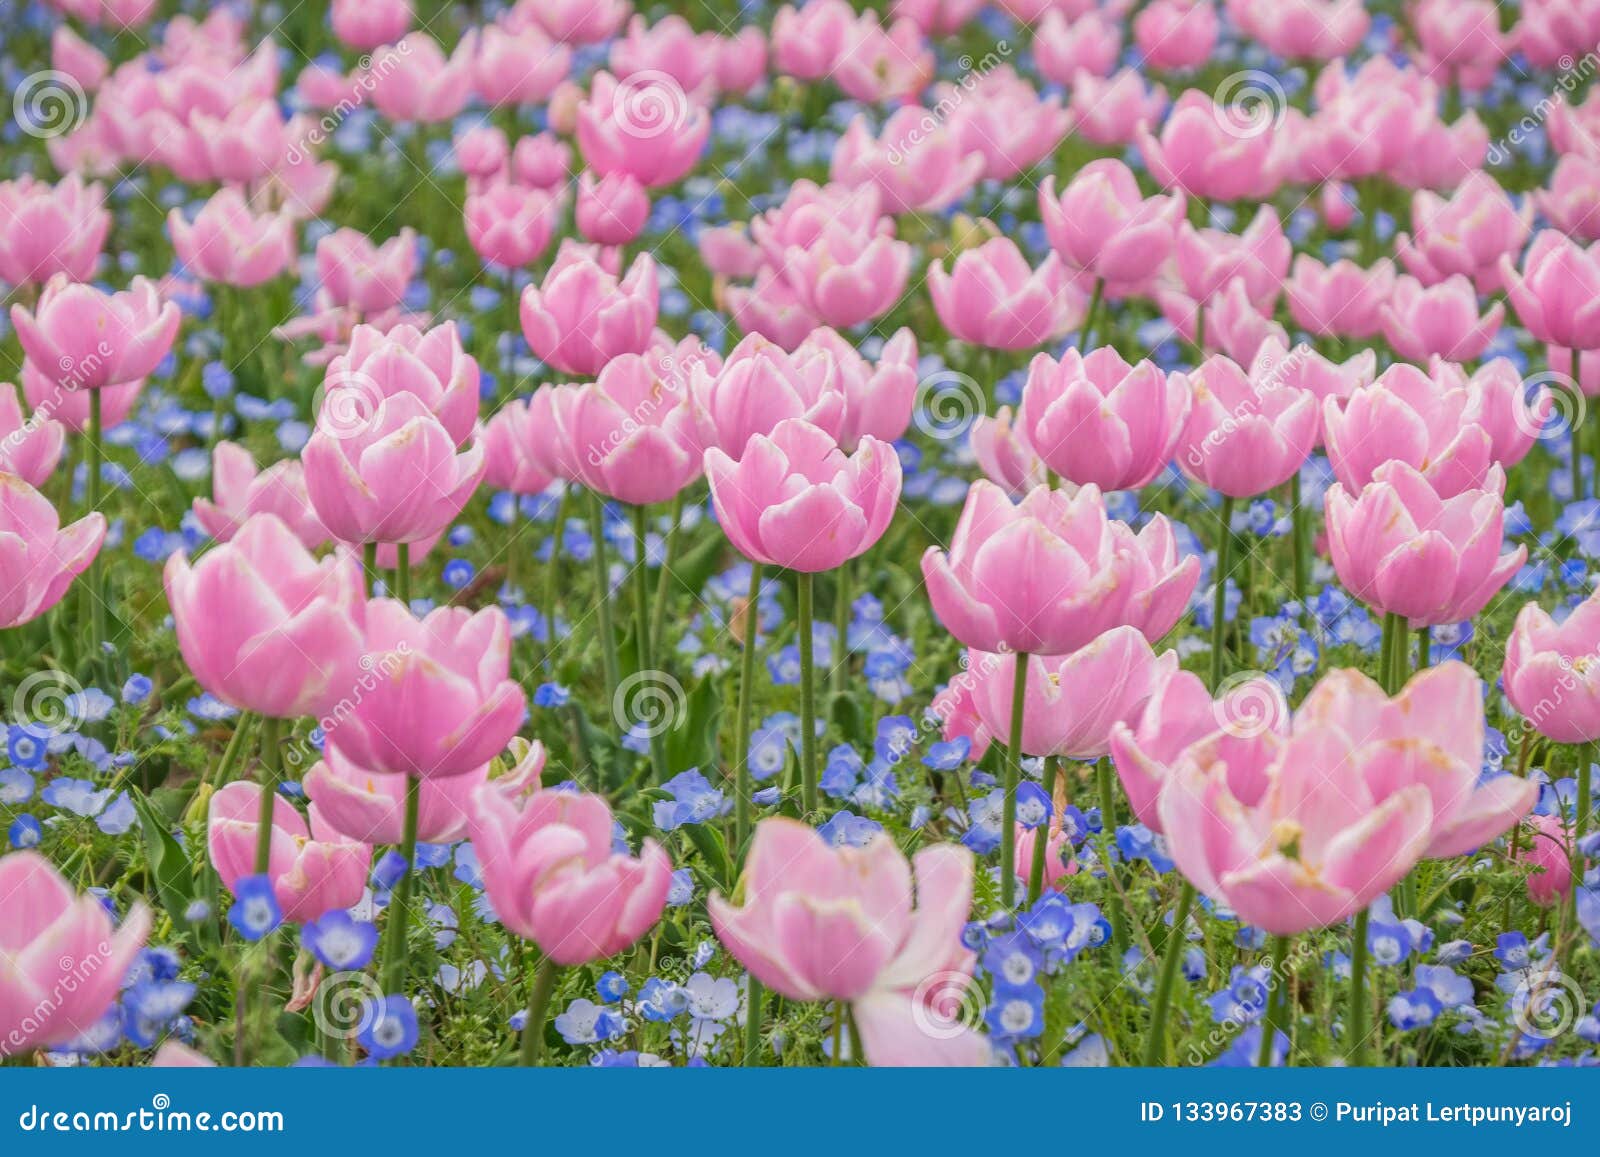 tulip field in nabana no sato garden, japan stock image - image of